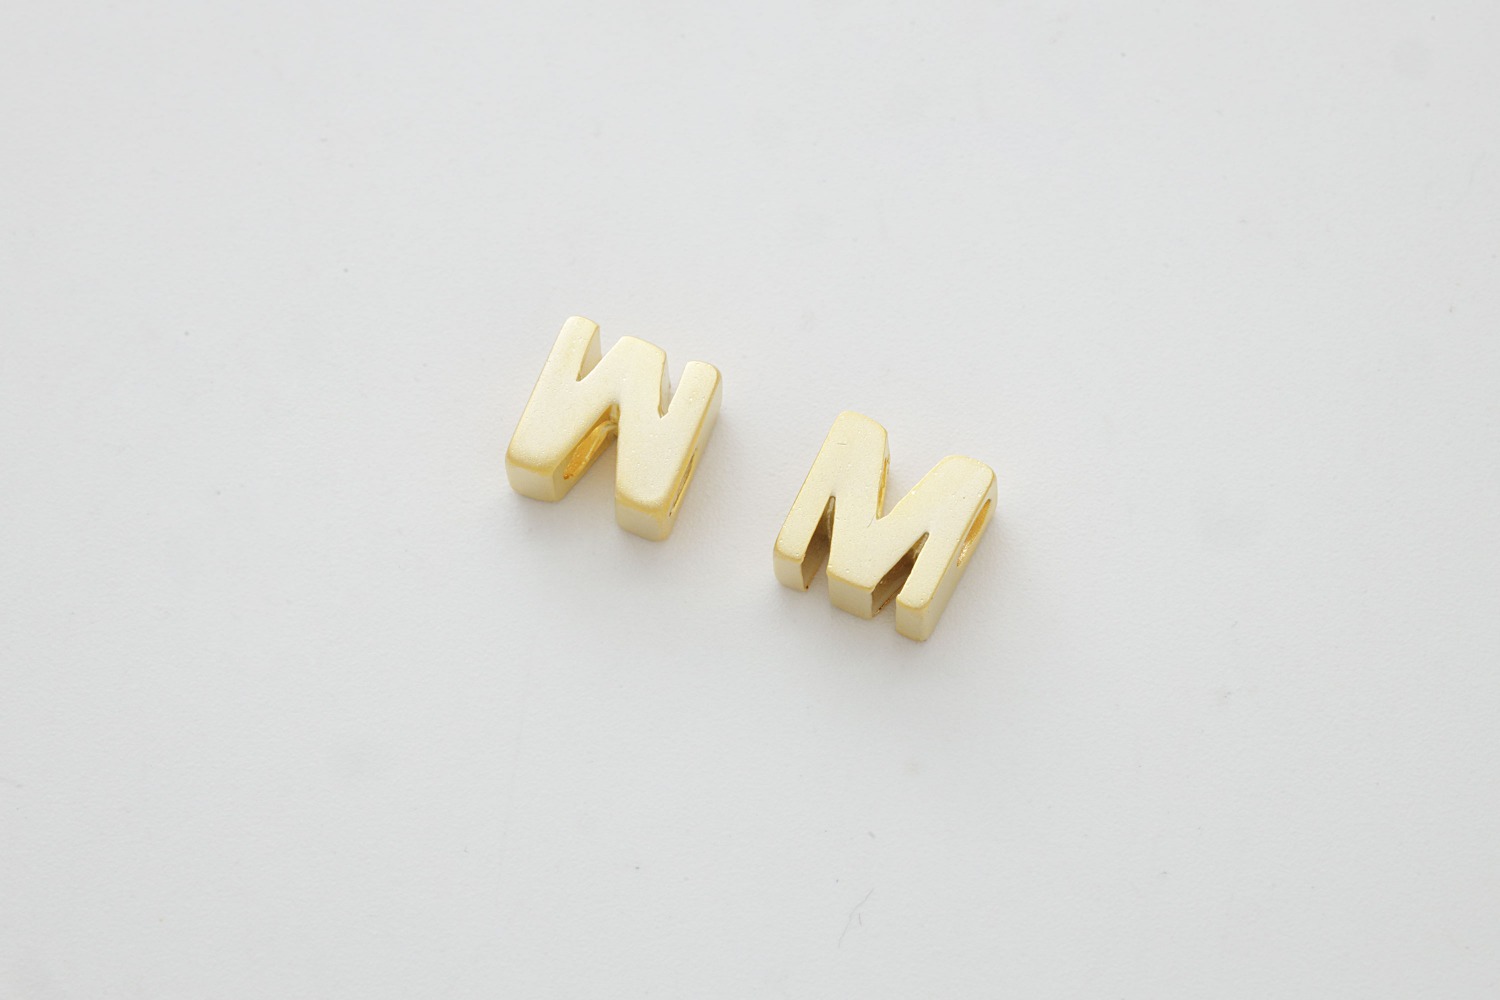 [AM-G11] Alphabet M, 2 pcs, 8x7x4mm, Hole size 2x3mm, Capital letter, Matte gold plated brass